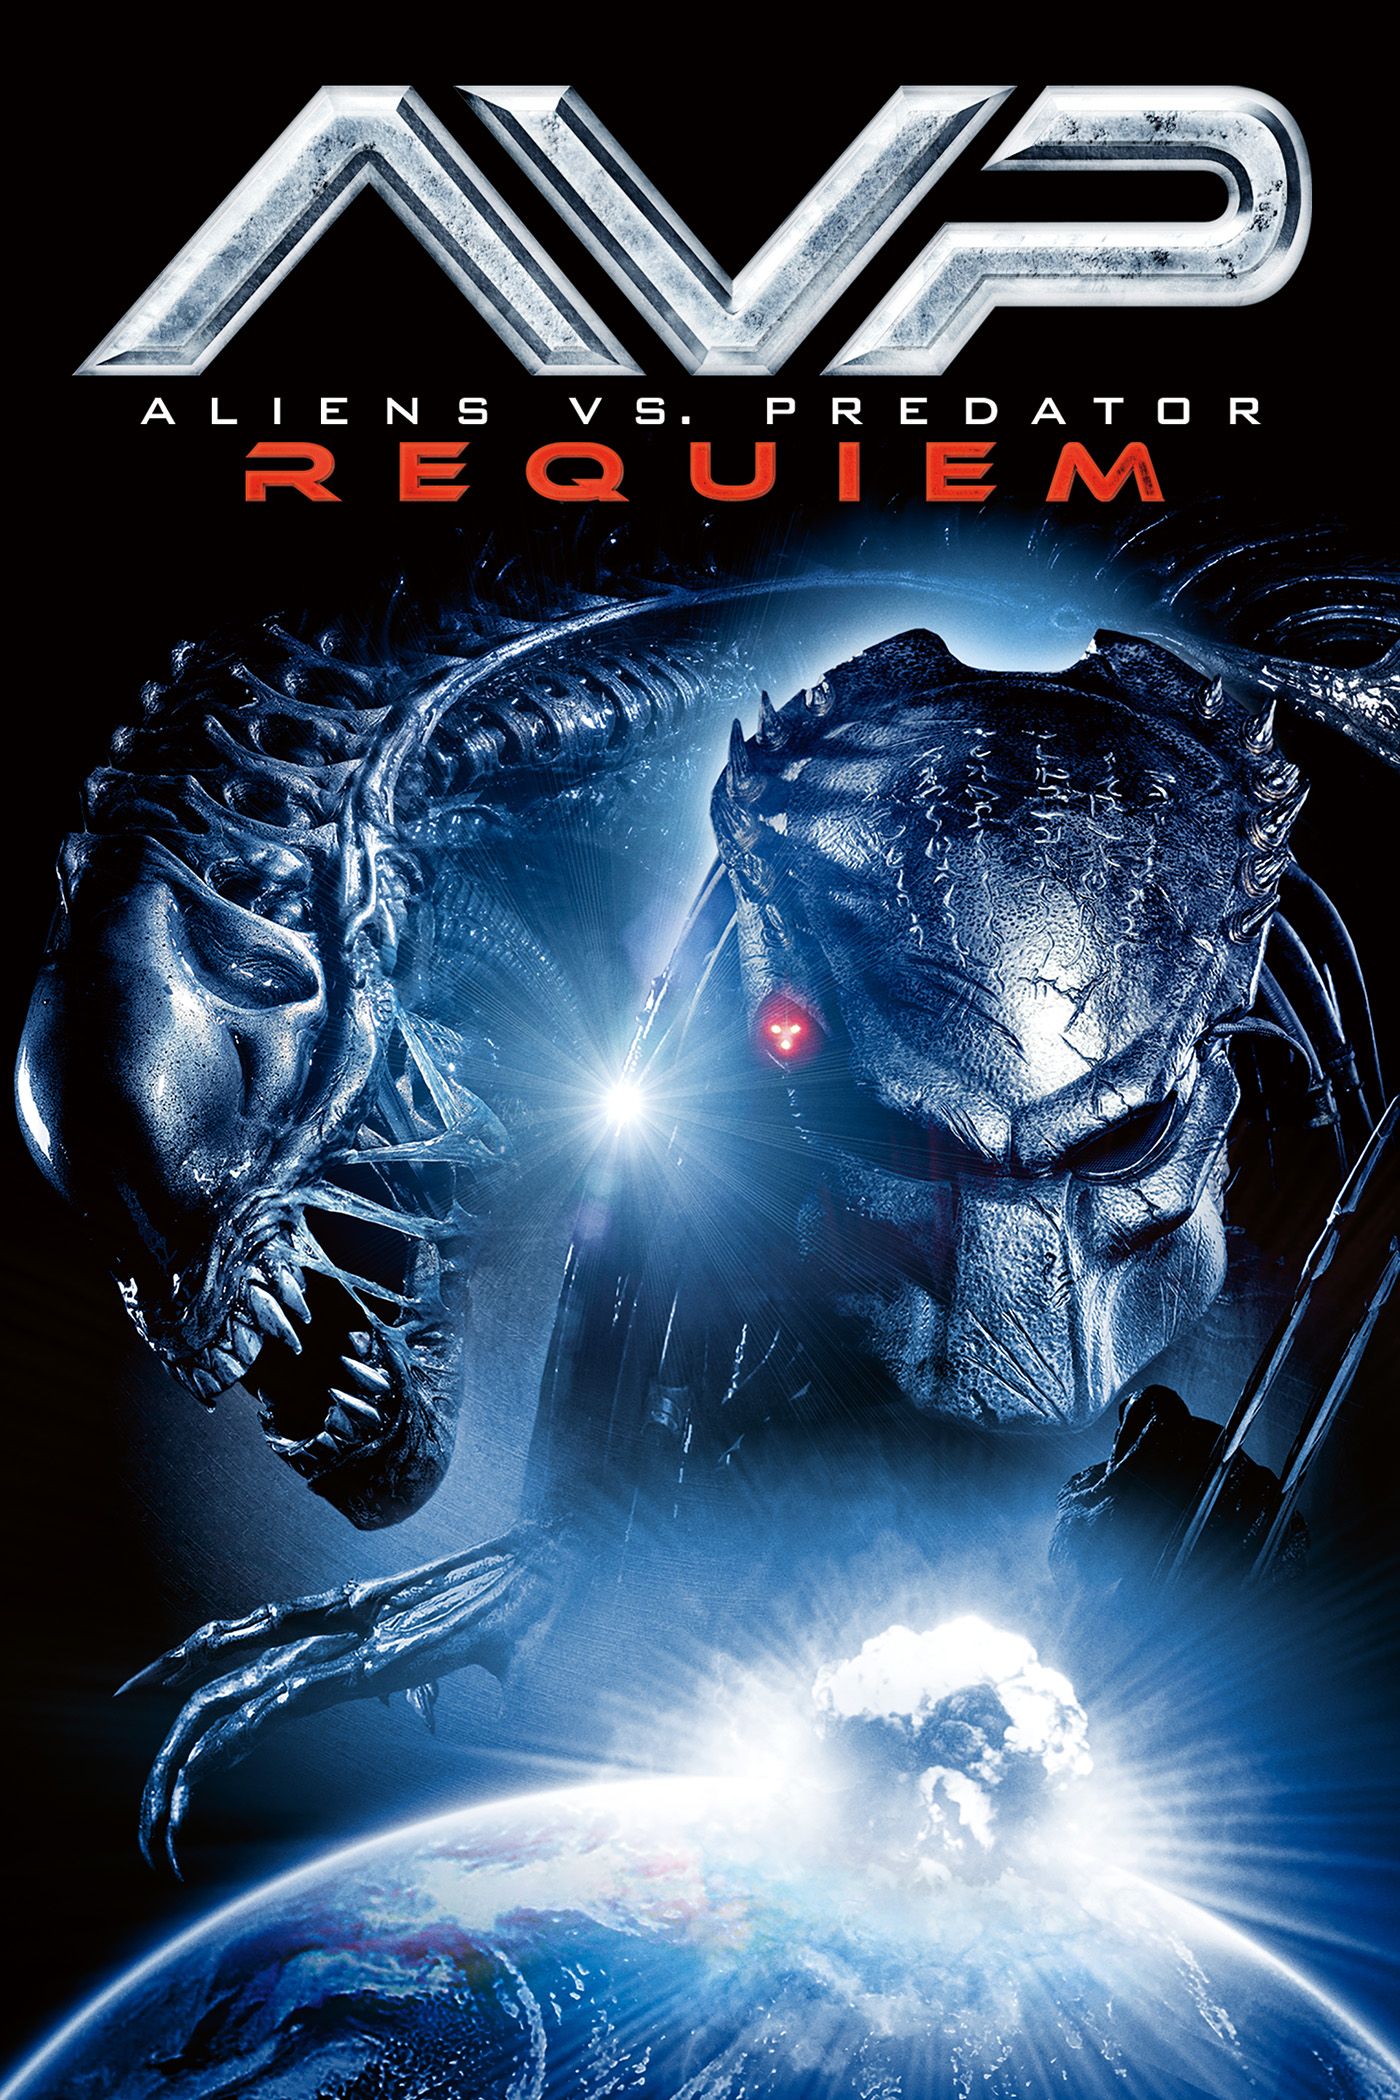 aliens vs predator 2 full movie watch online